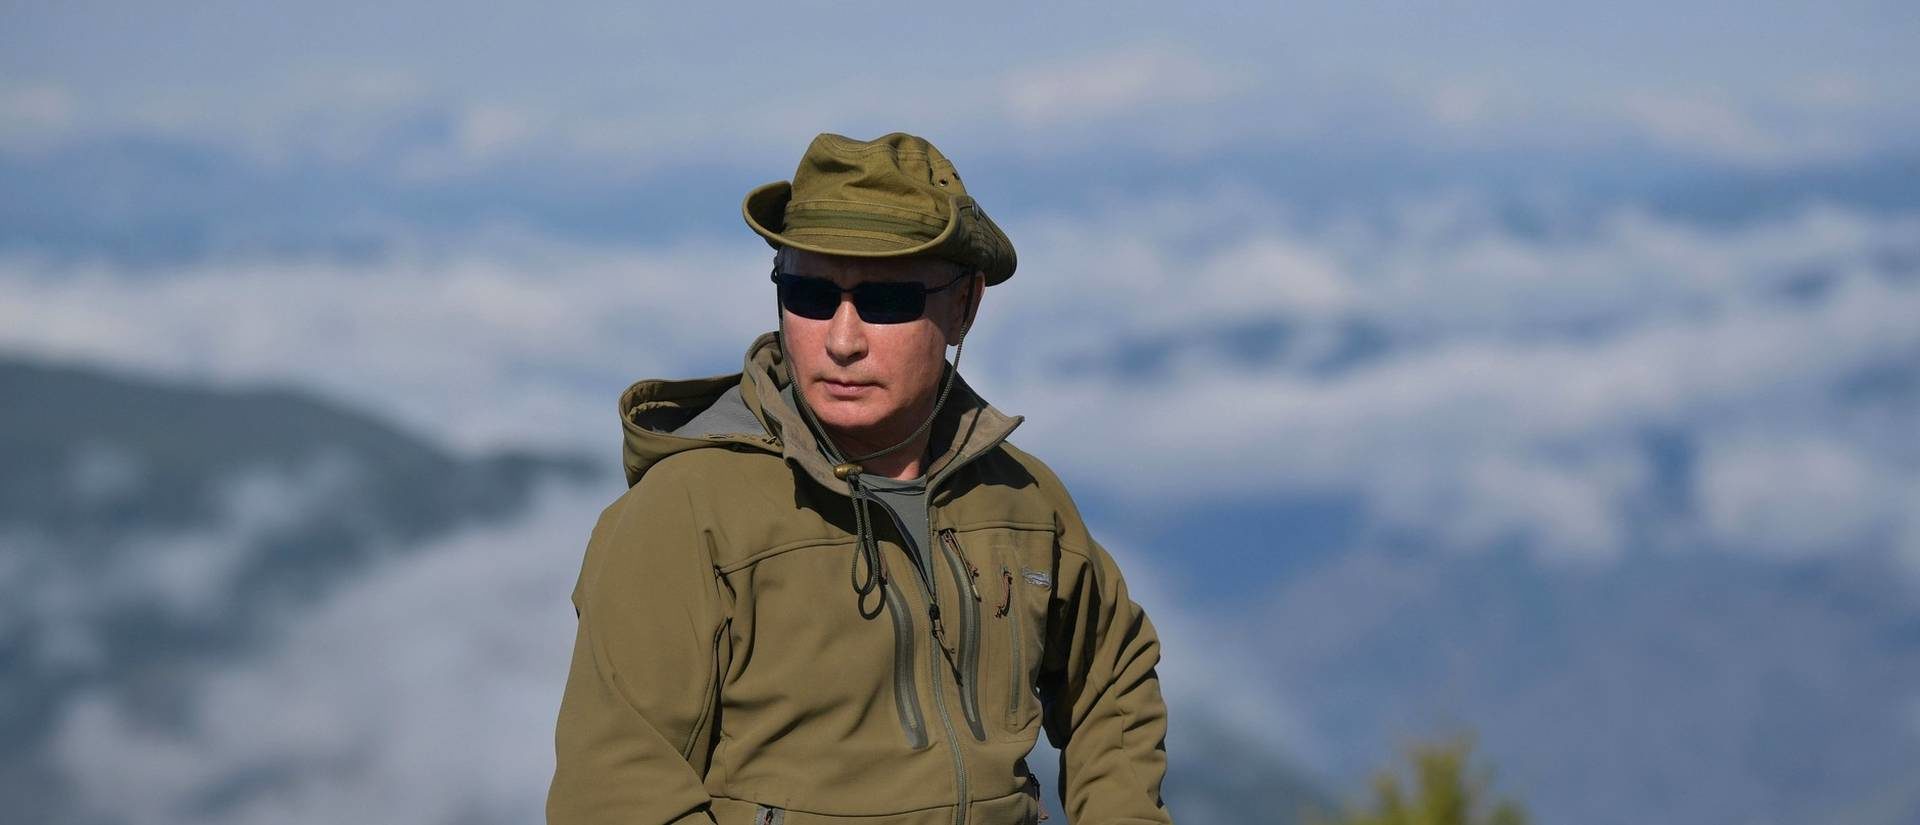 Vladimir Putin in the wild